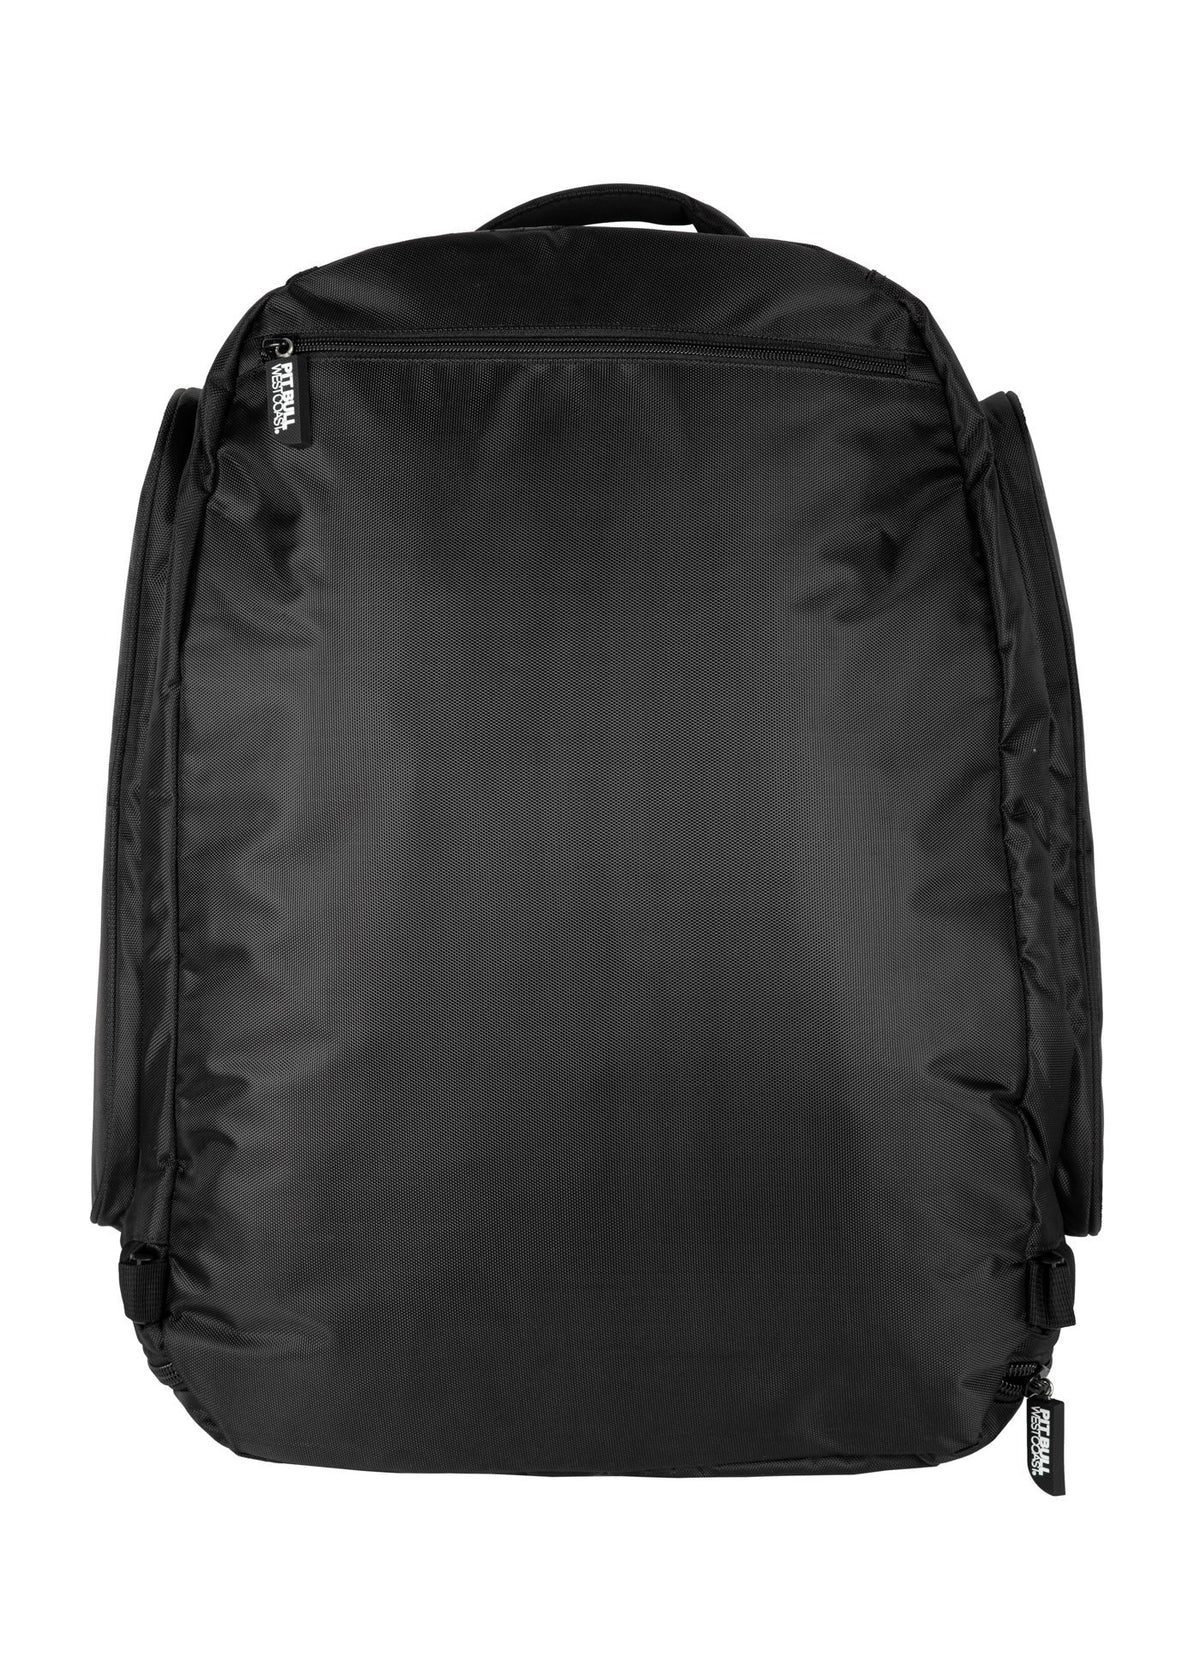 ADCC Black Big Training Backpack.